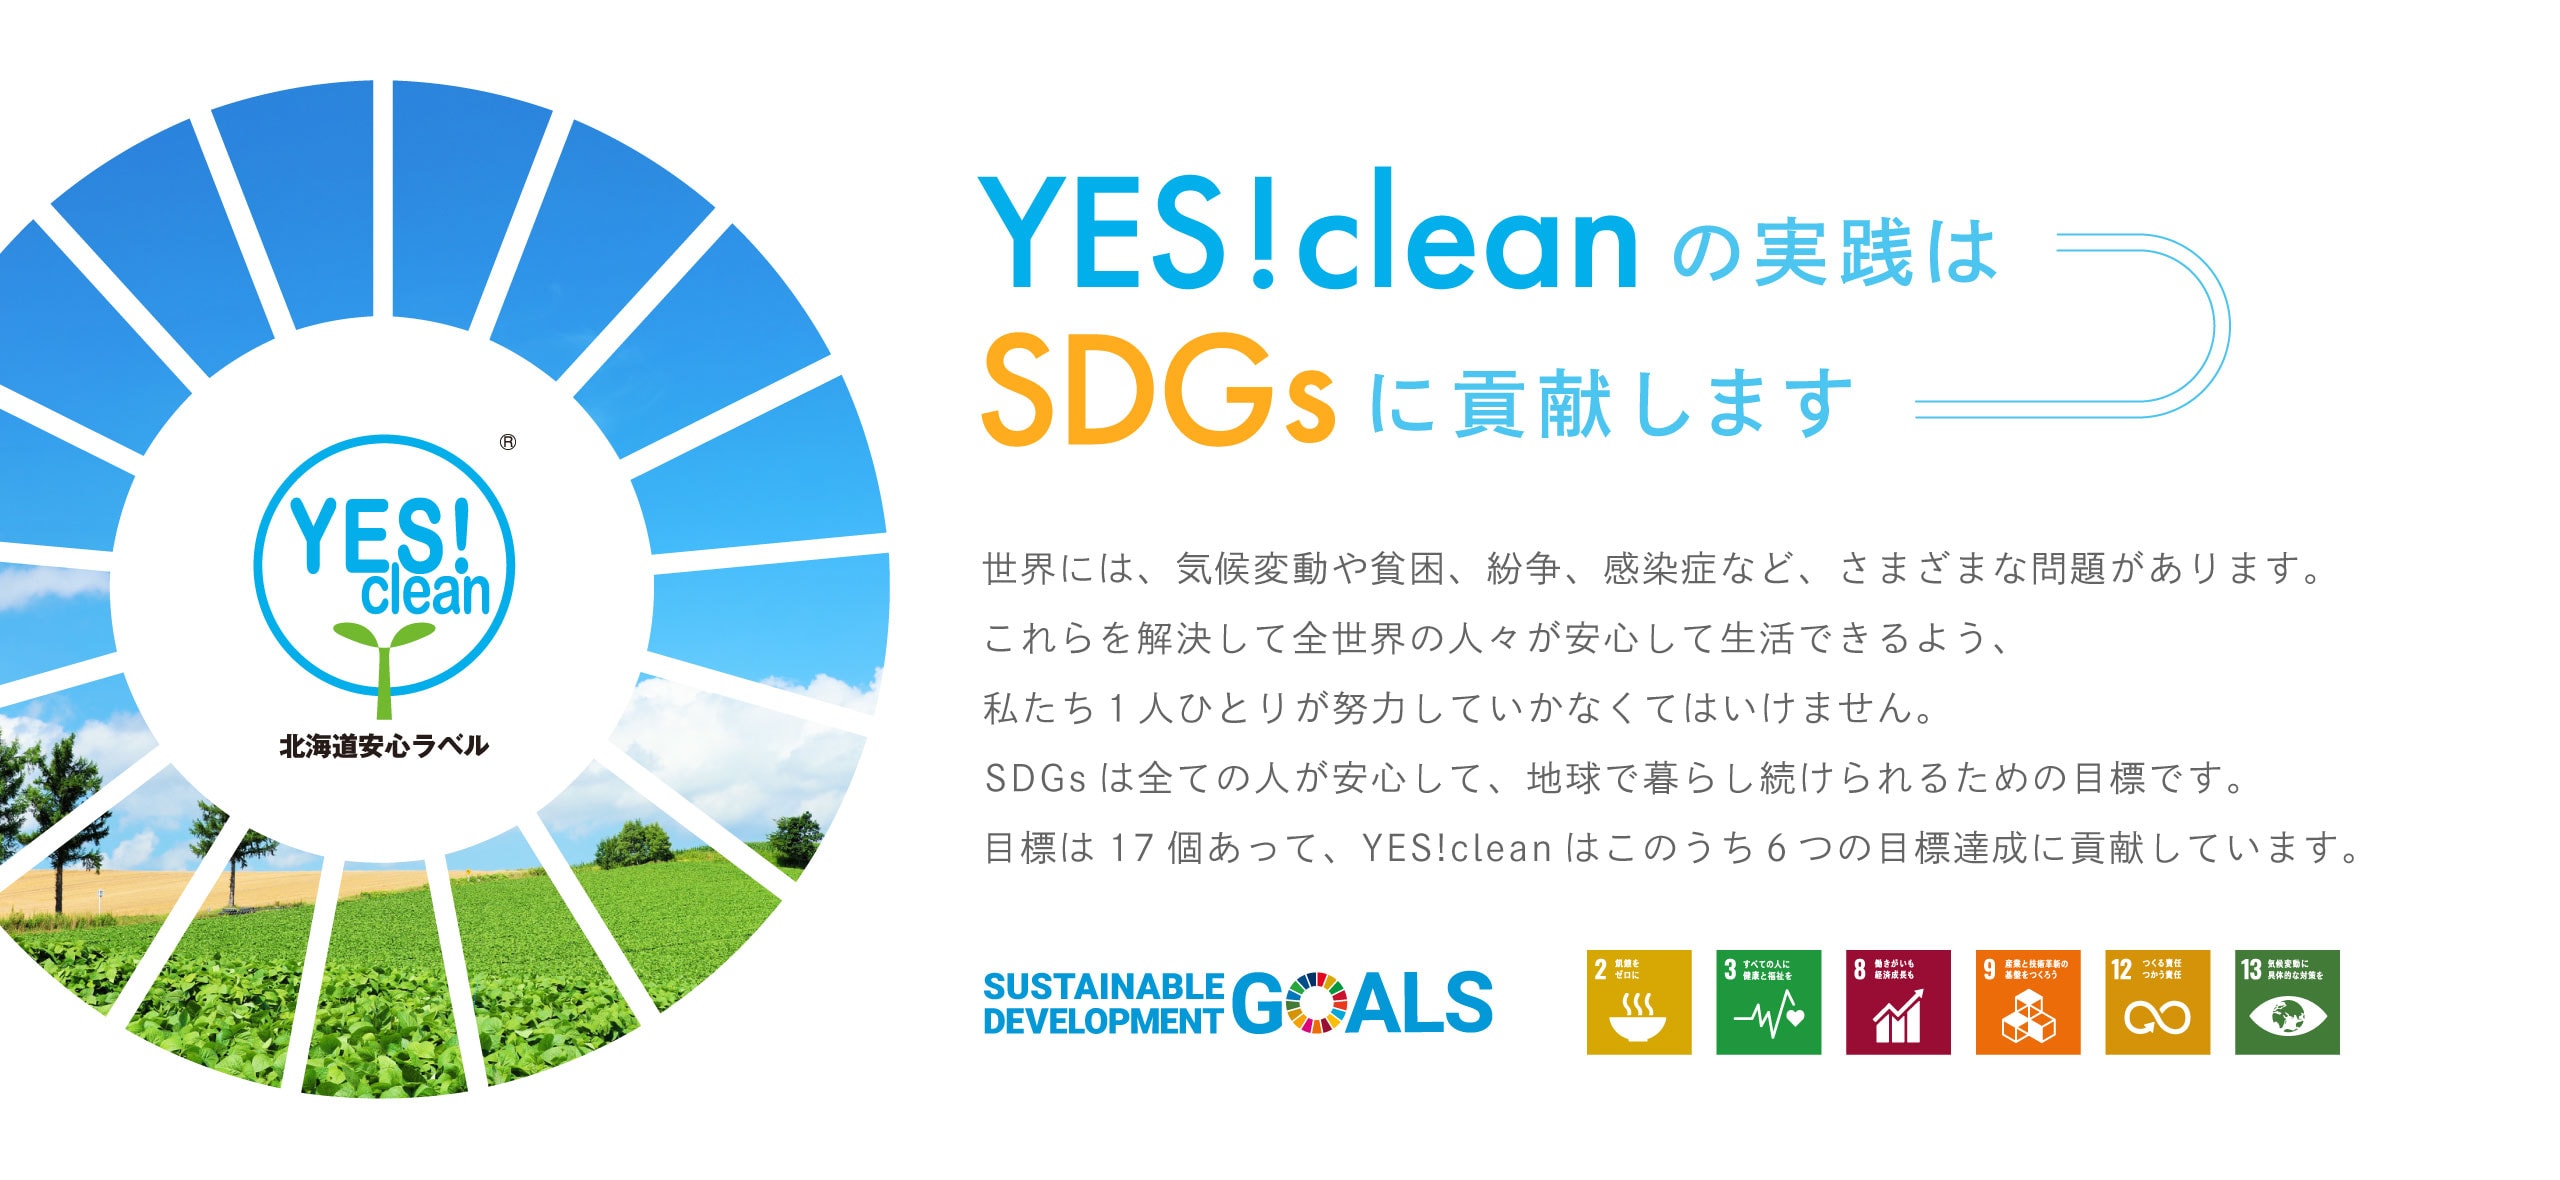 YES!cleanの実践はSDGsに貢献します